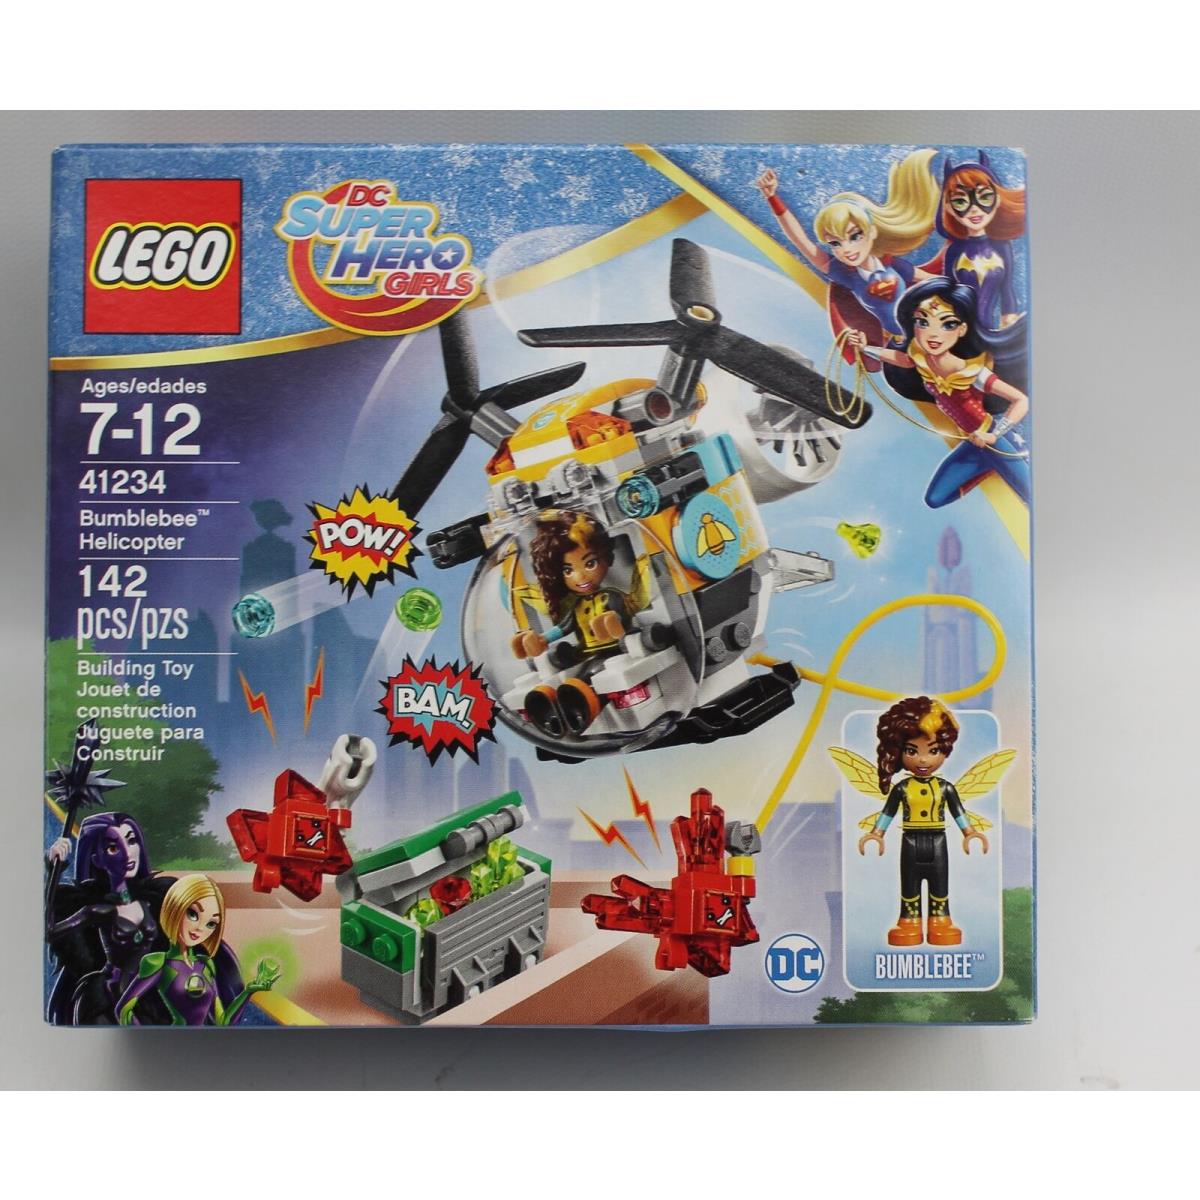 Lego DC Super Hero Girls Bumblebee Helicopter Set 41234